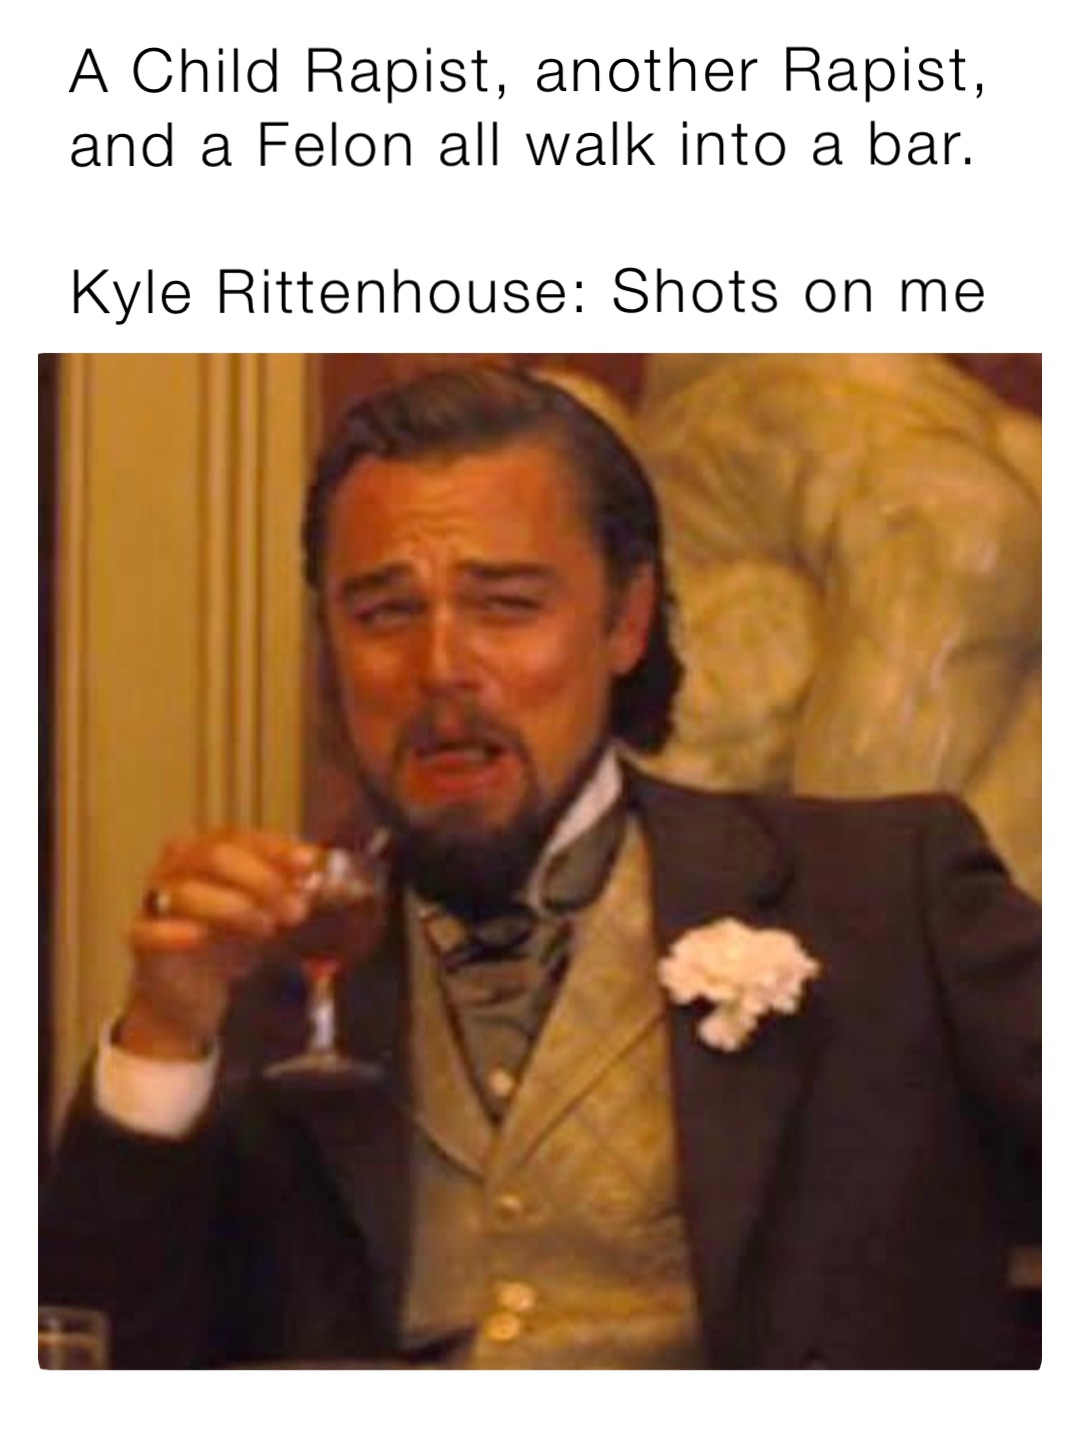 A Child Rapist, another Rapist, and a Felon all walk into a bar. 

Kyle Rittenhouse: Shots on me